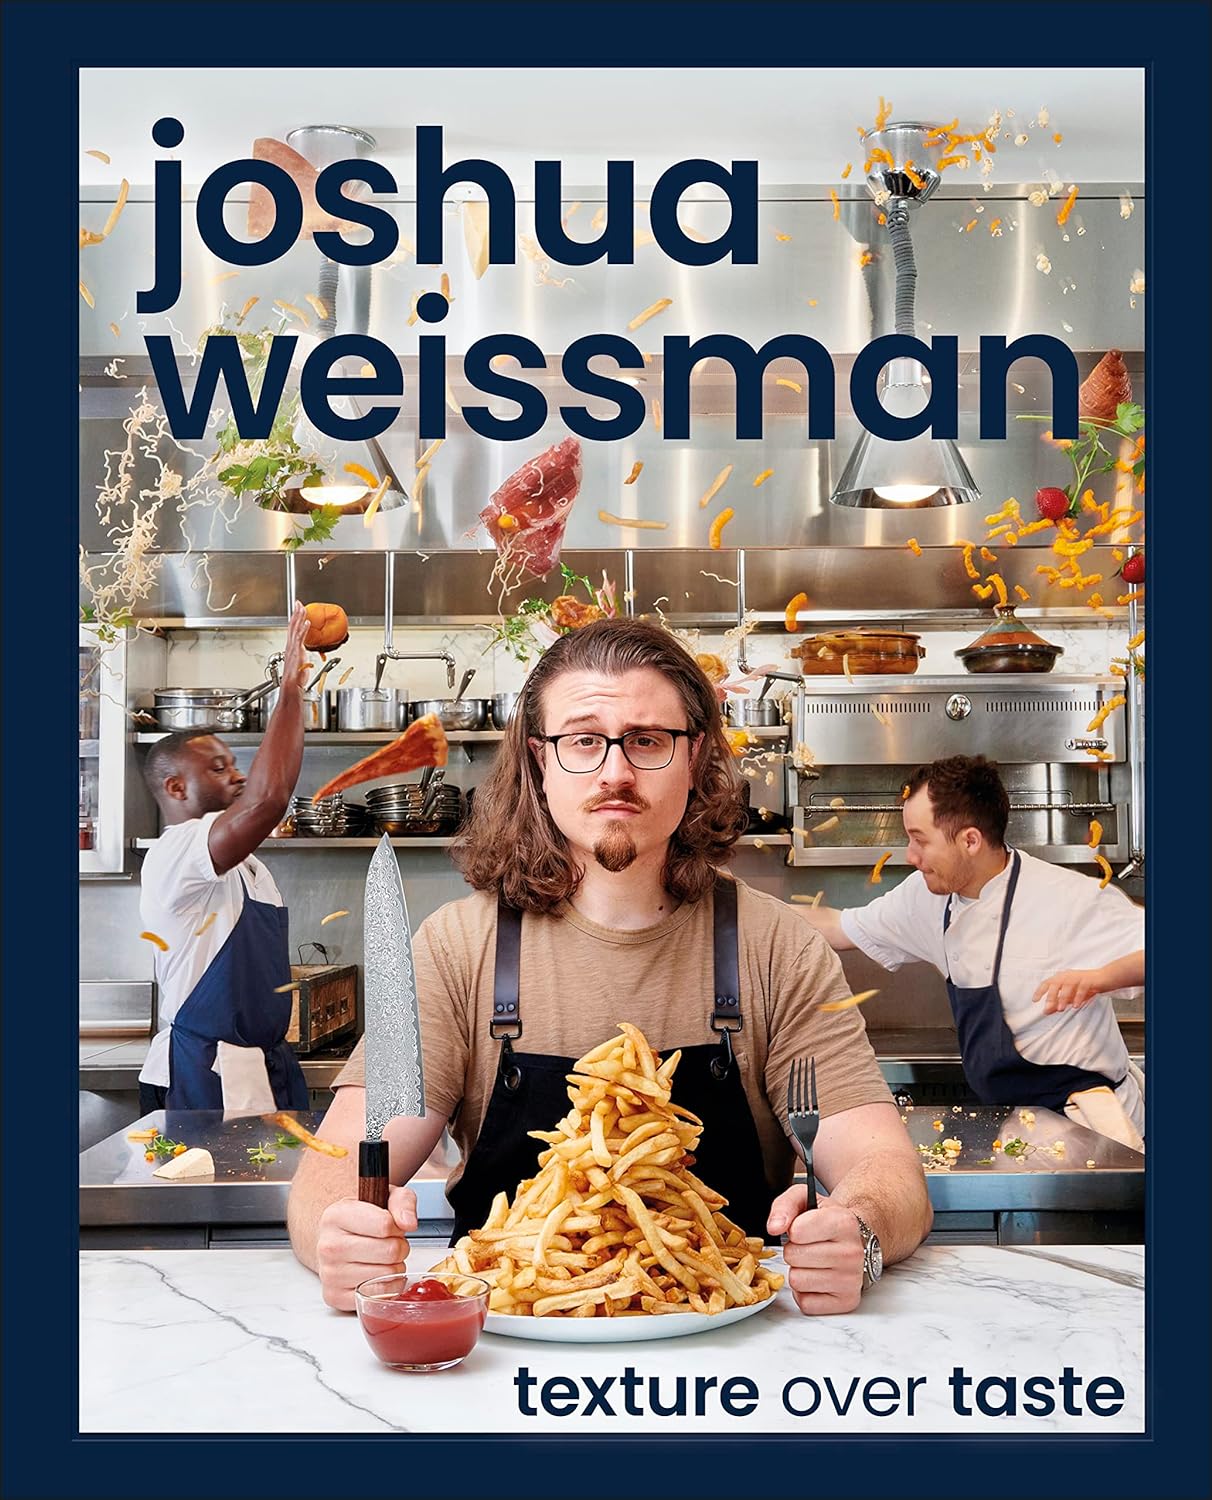 Texture Over Taste | Joshua Weissman